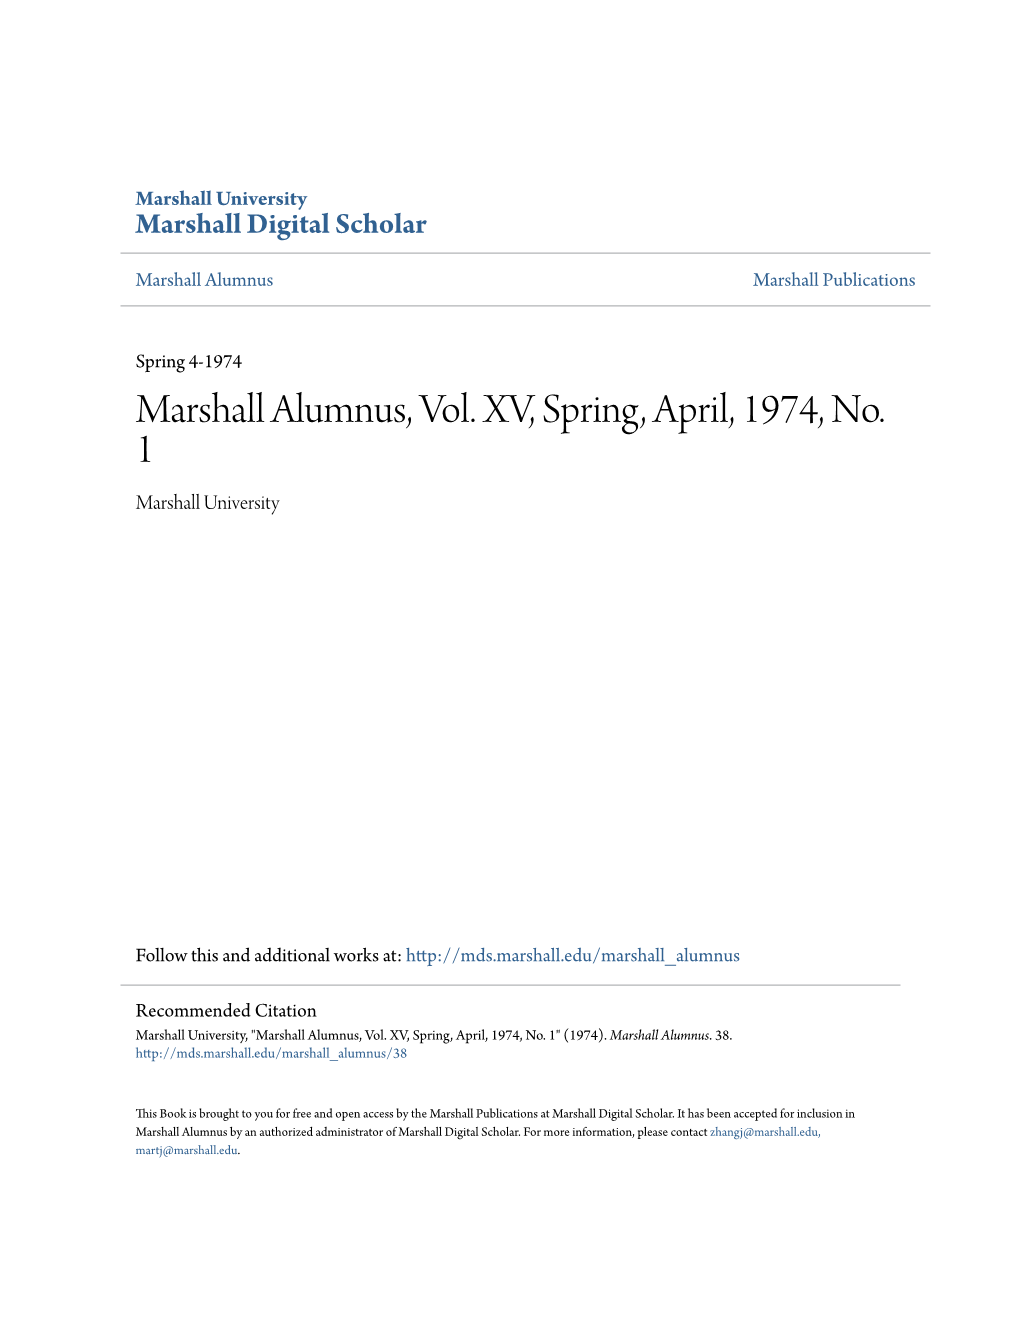 Marshall Alumnus, Vol. XV, Spring, April, 1974, No. 1 Marshall University